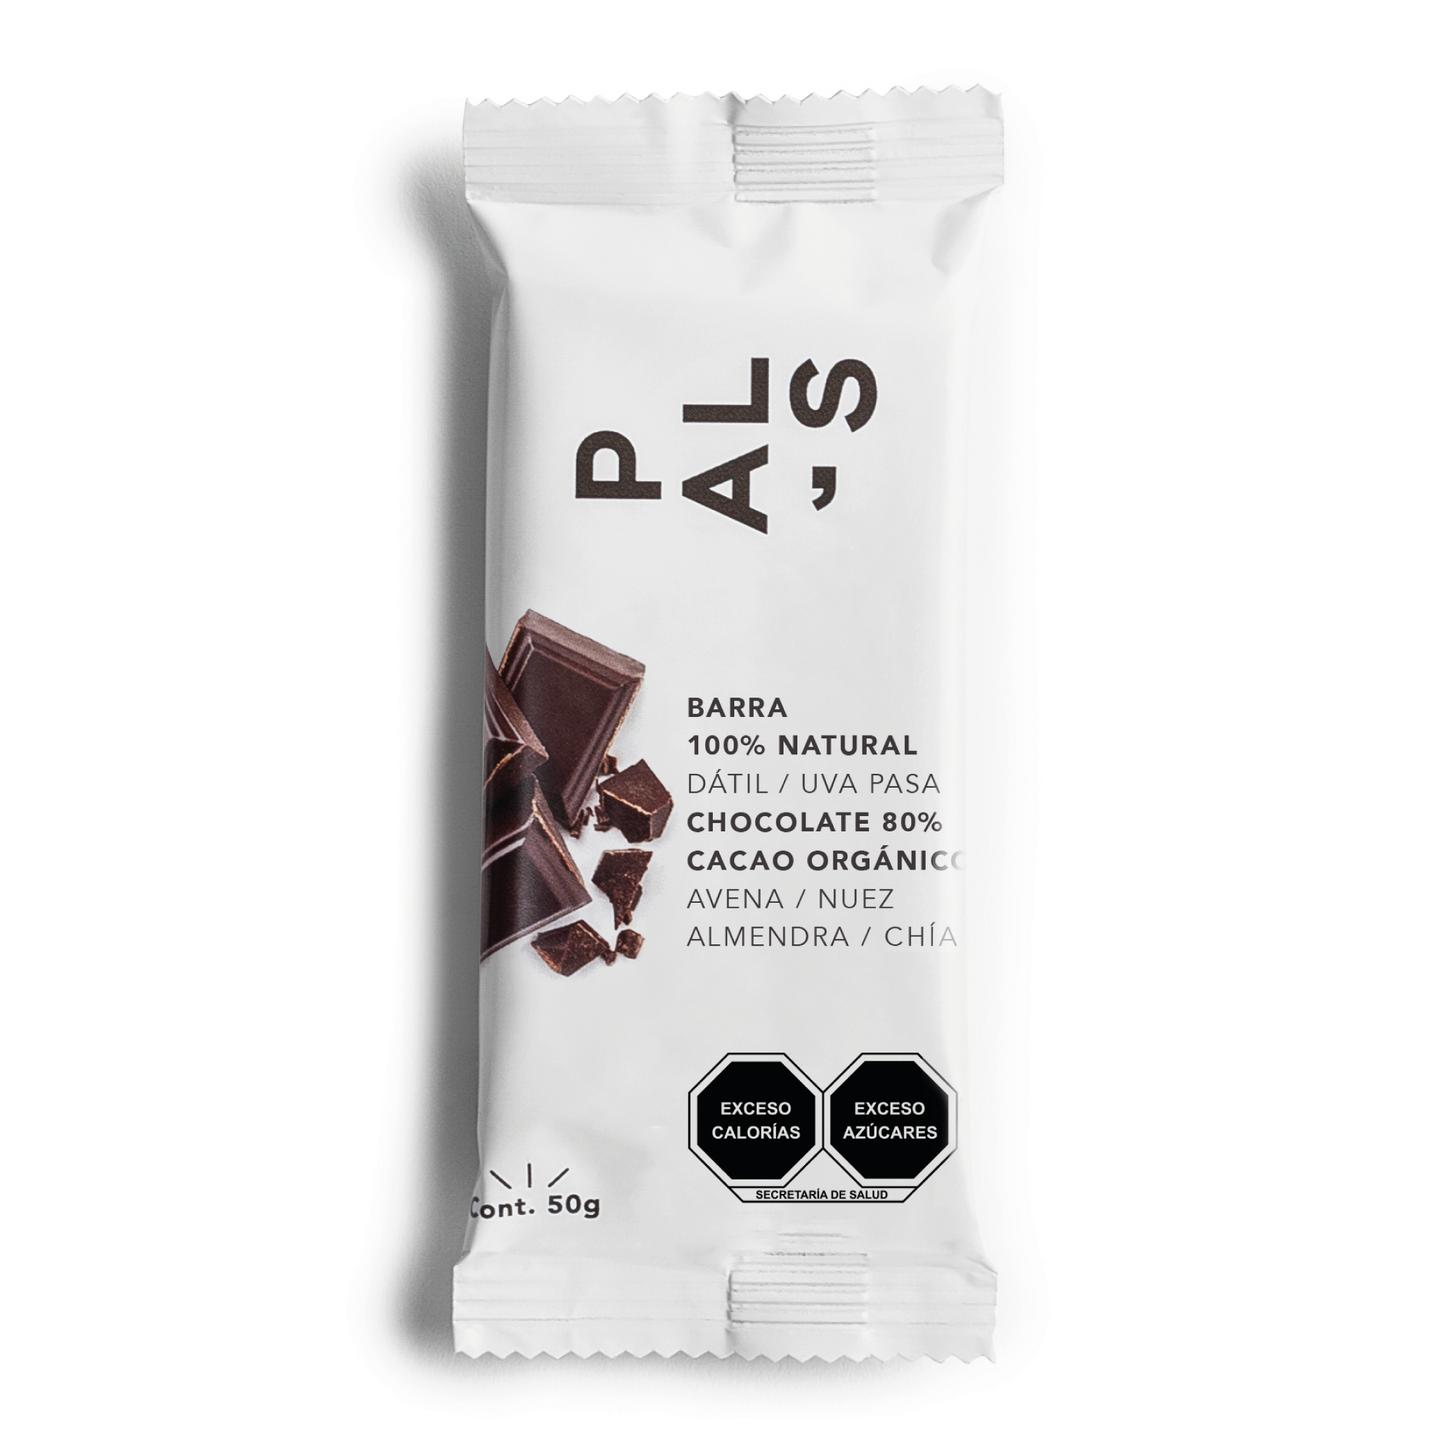 Barra Chocolate 80%